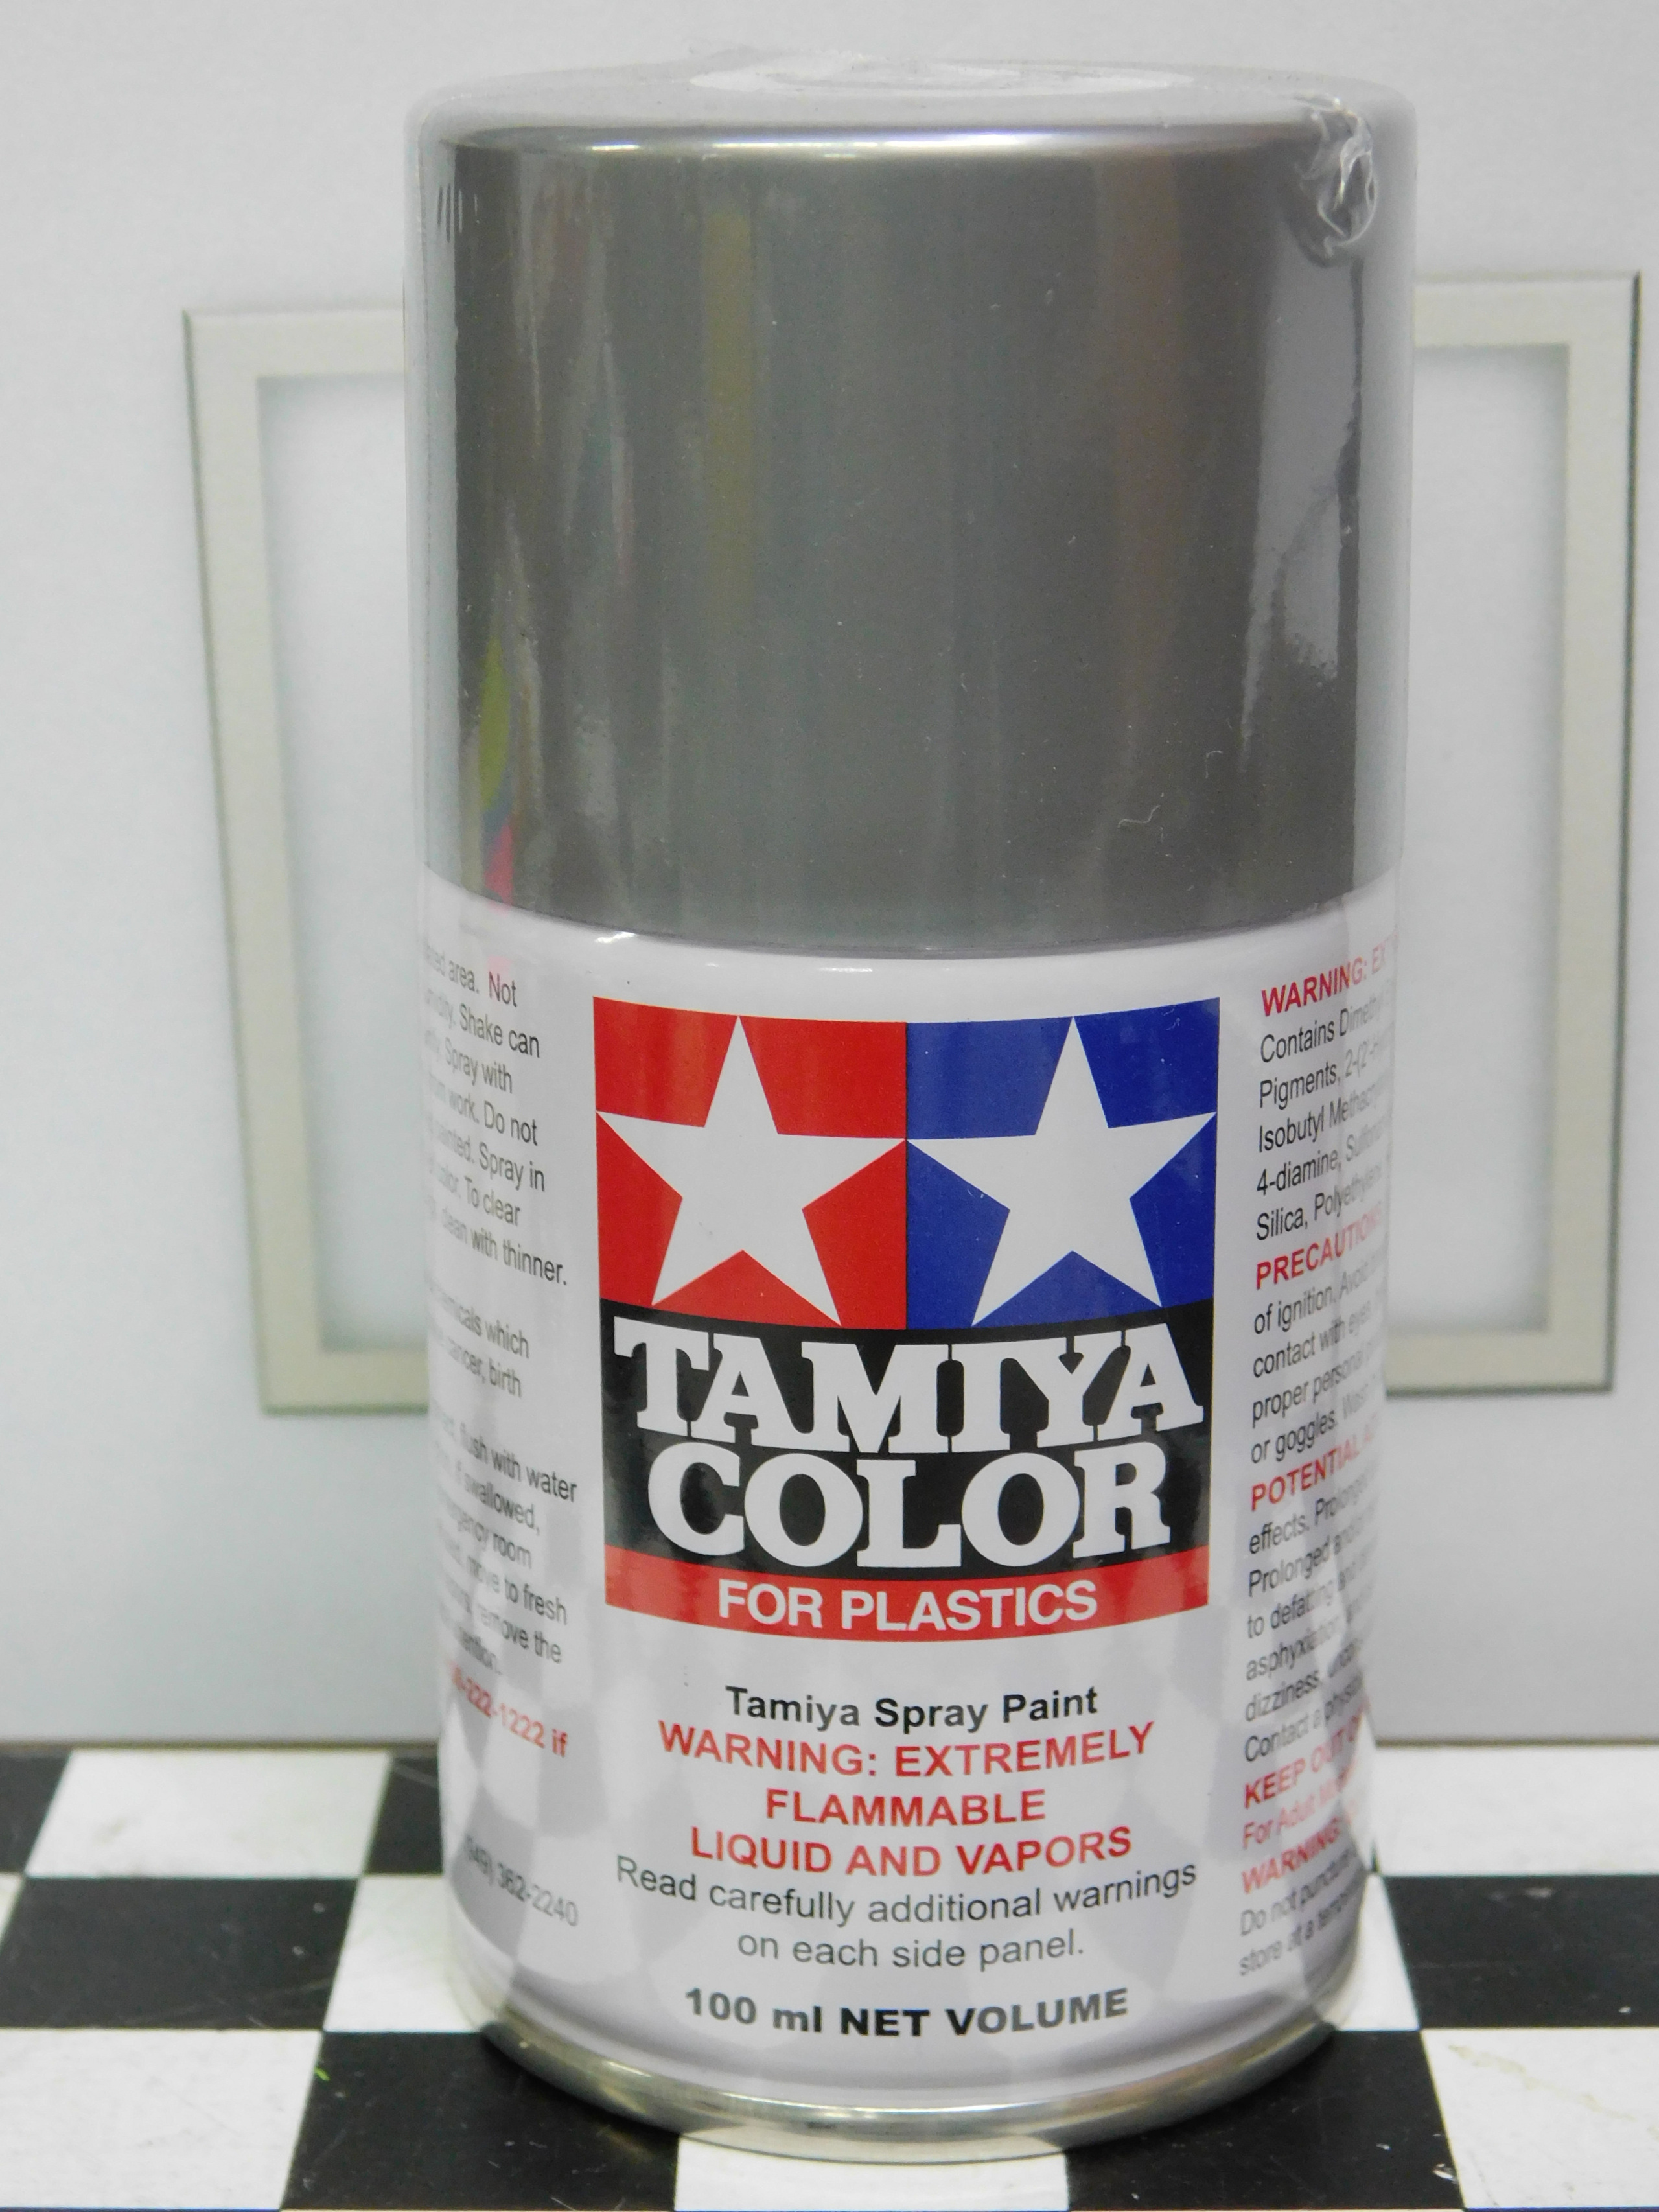 TAMIYA #85017: TS-17 GLOSS ALUMINUM Plastic Model Paint, 3 oz Spray